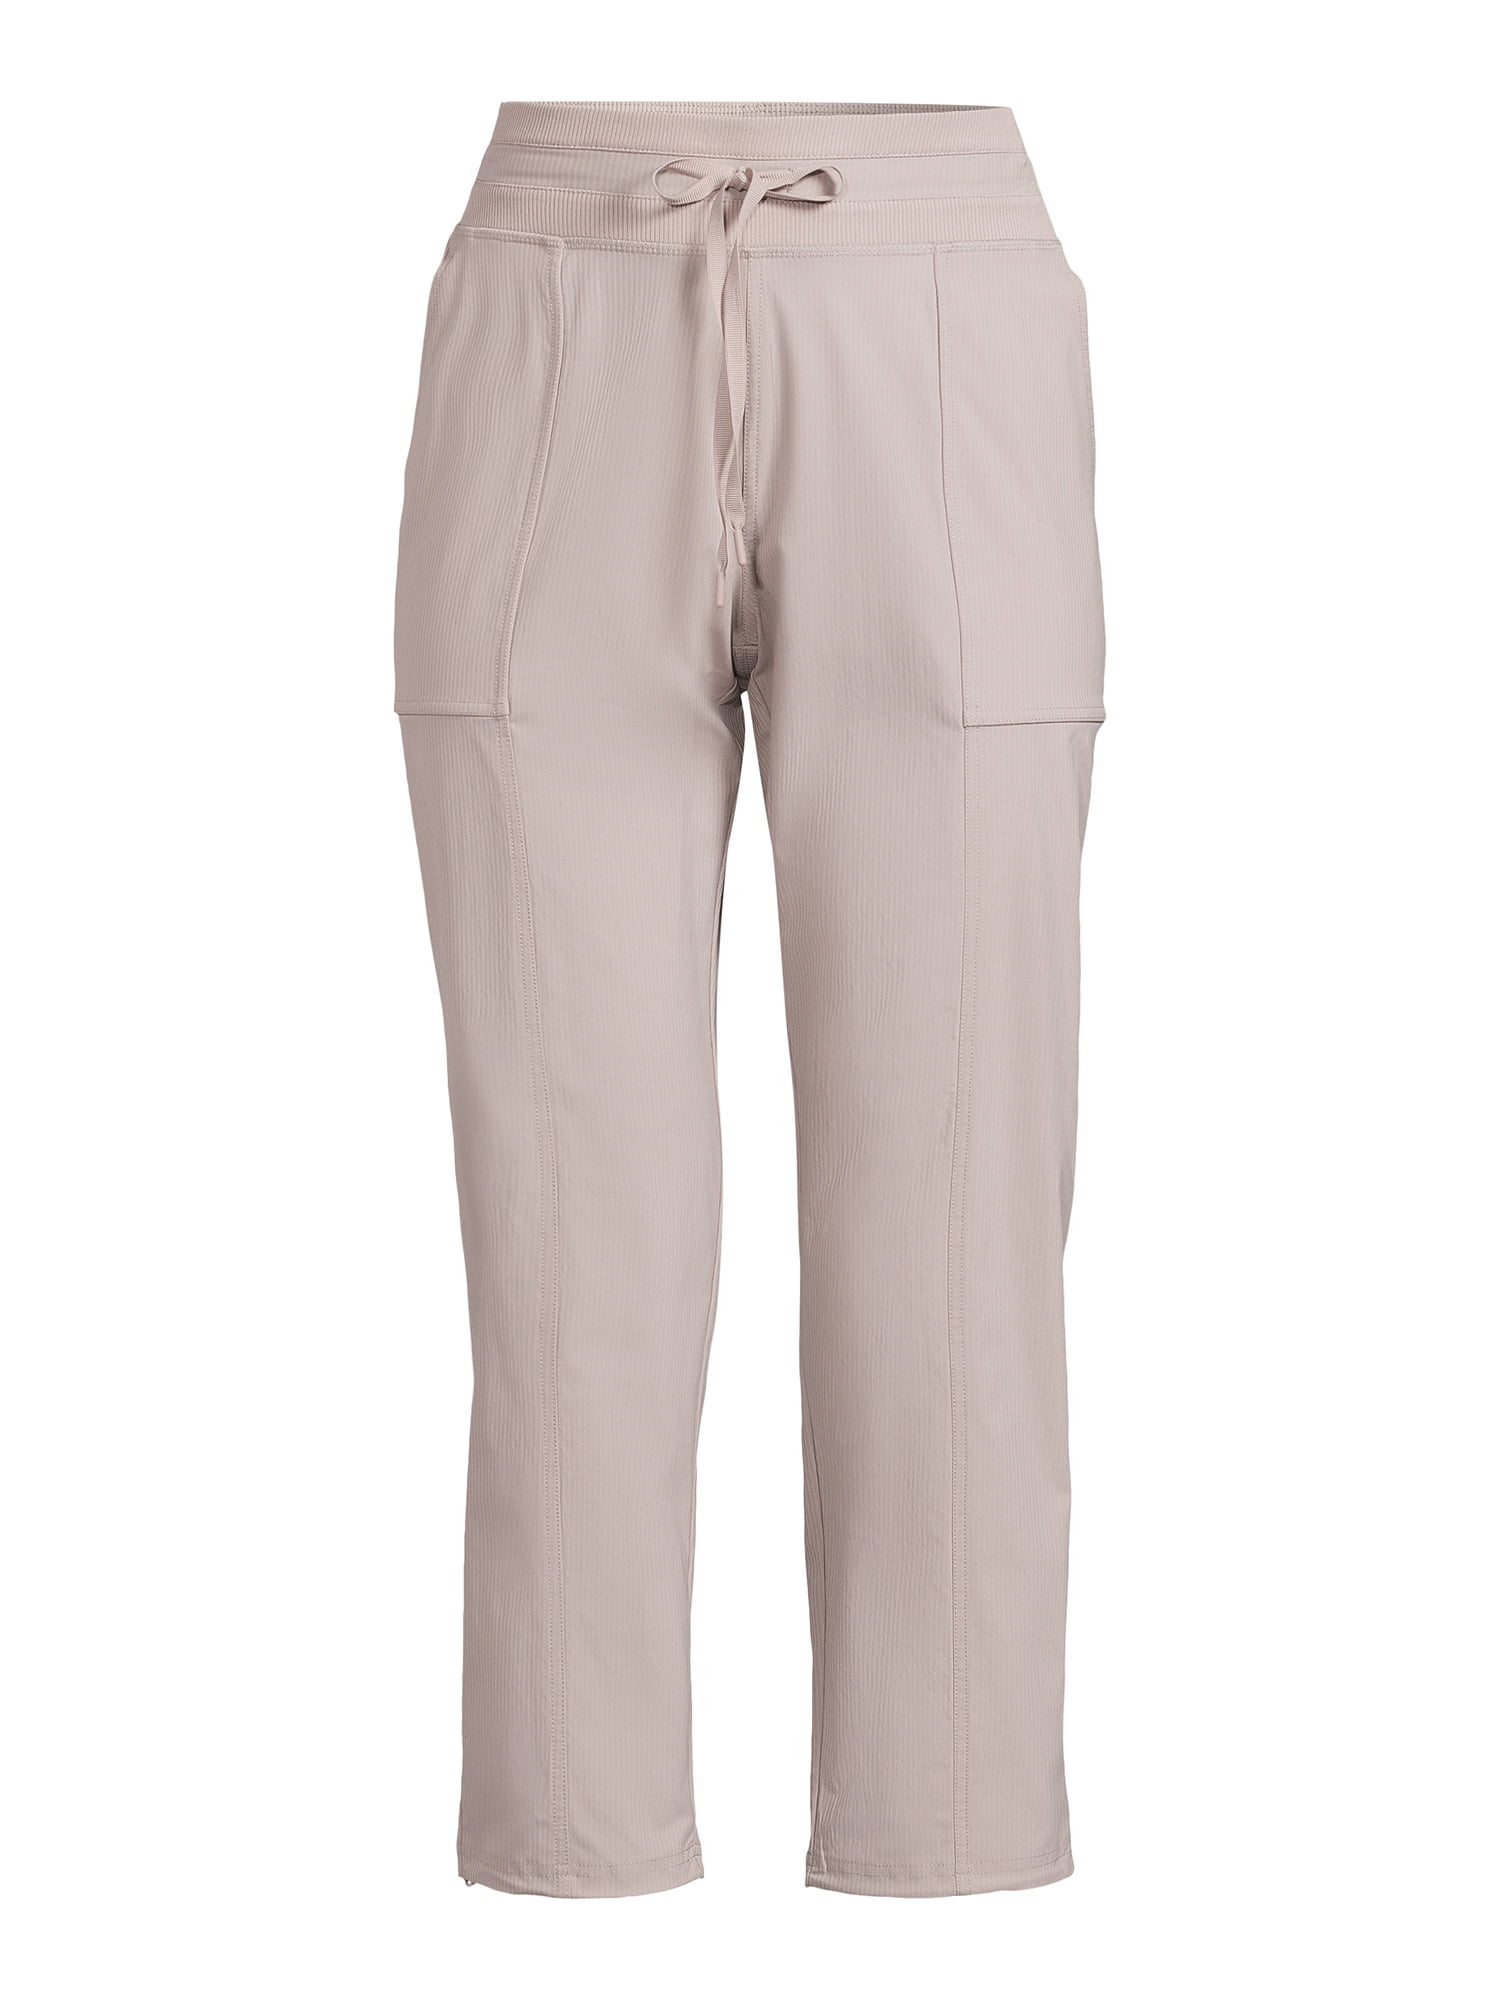 Avia Women's Outdoor Performance Pants, 28.5” Inseam, Sizes XS-3X 